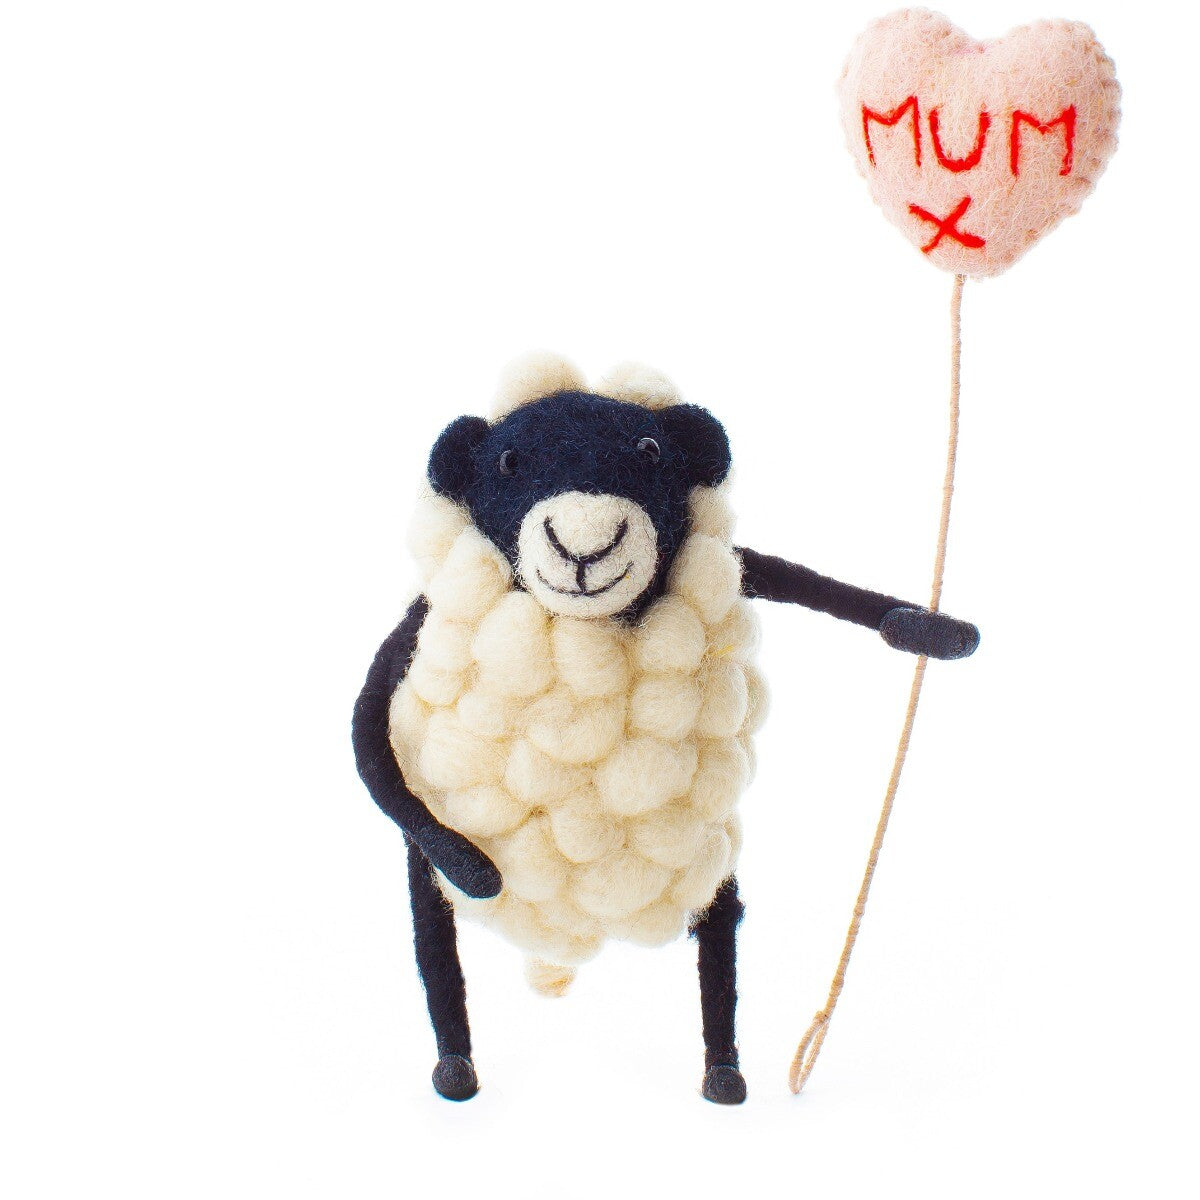 Mum Balloon Sheep